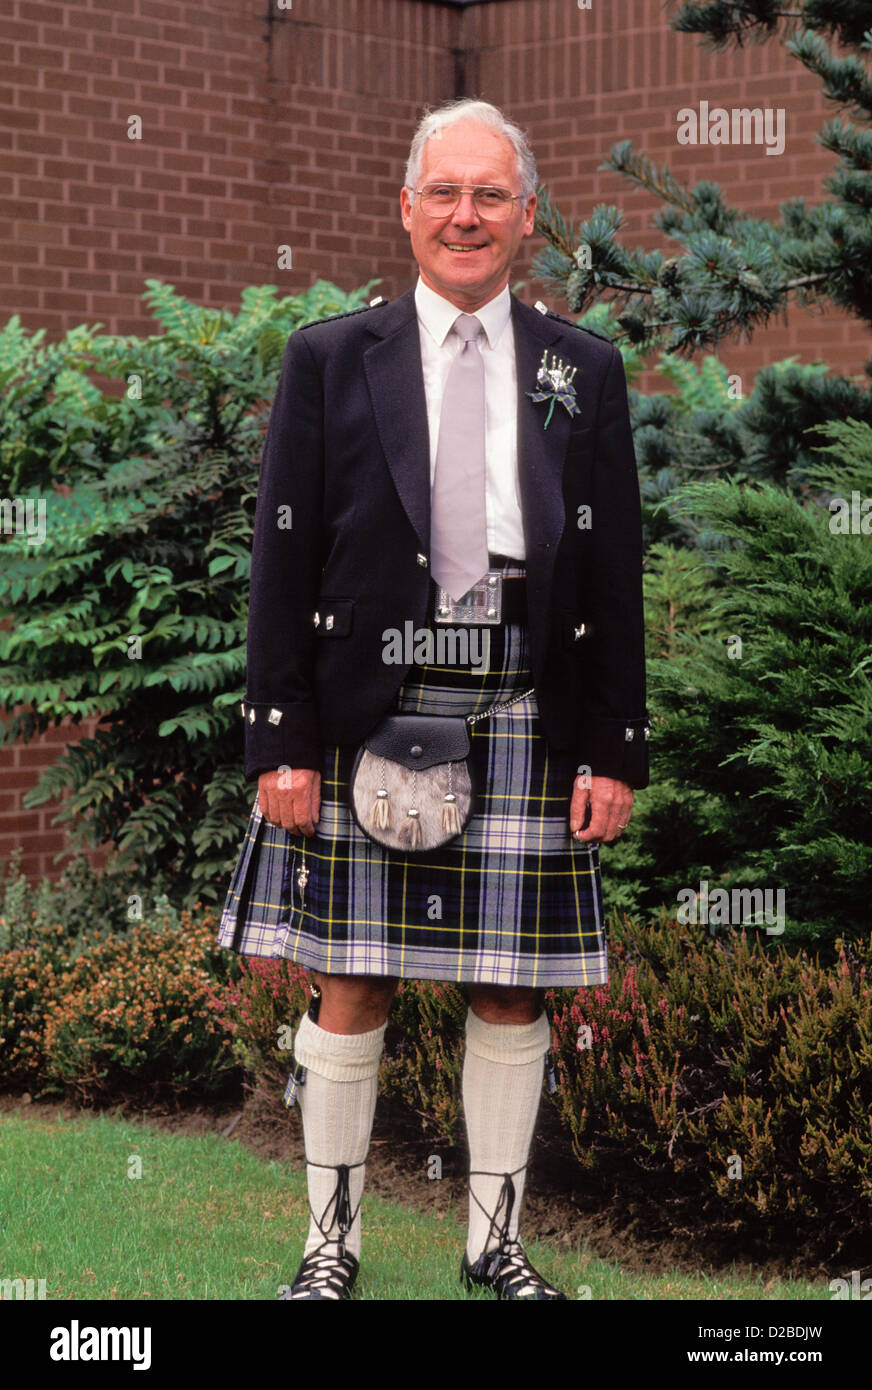 Scottish Kilt Man High Resolution Stock Photography and Images - Alamy